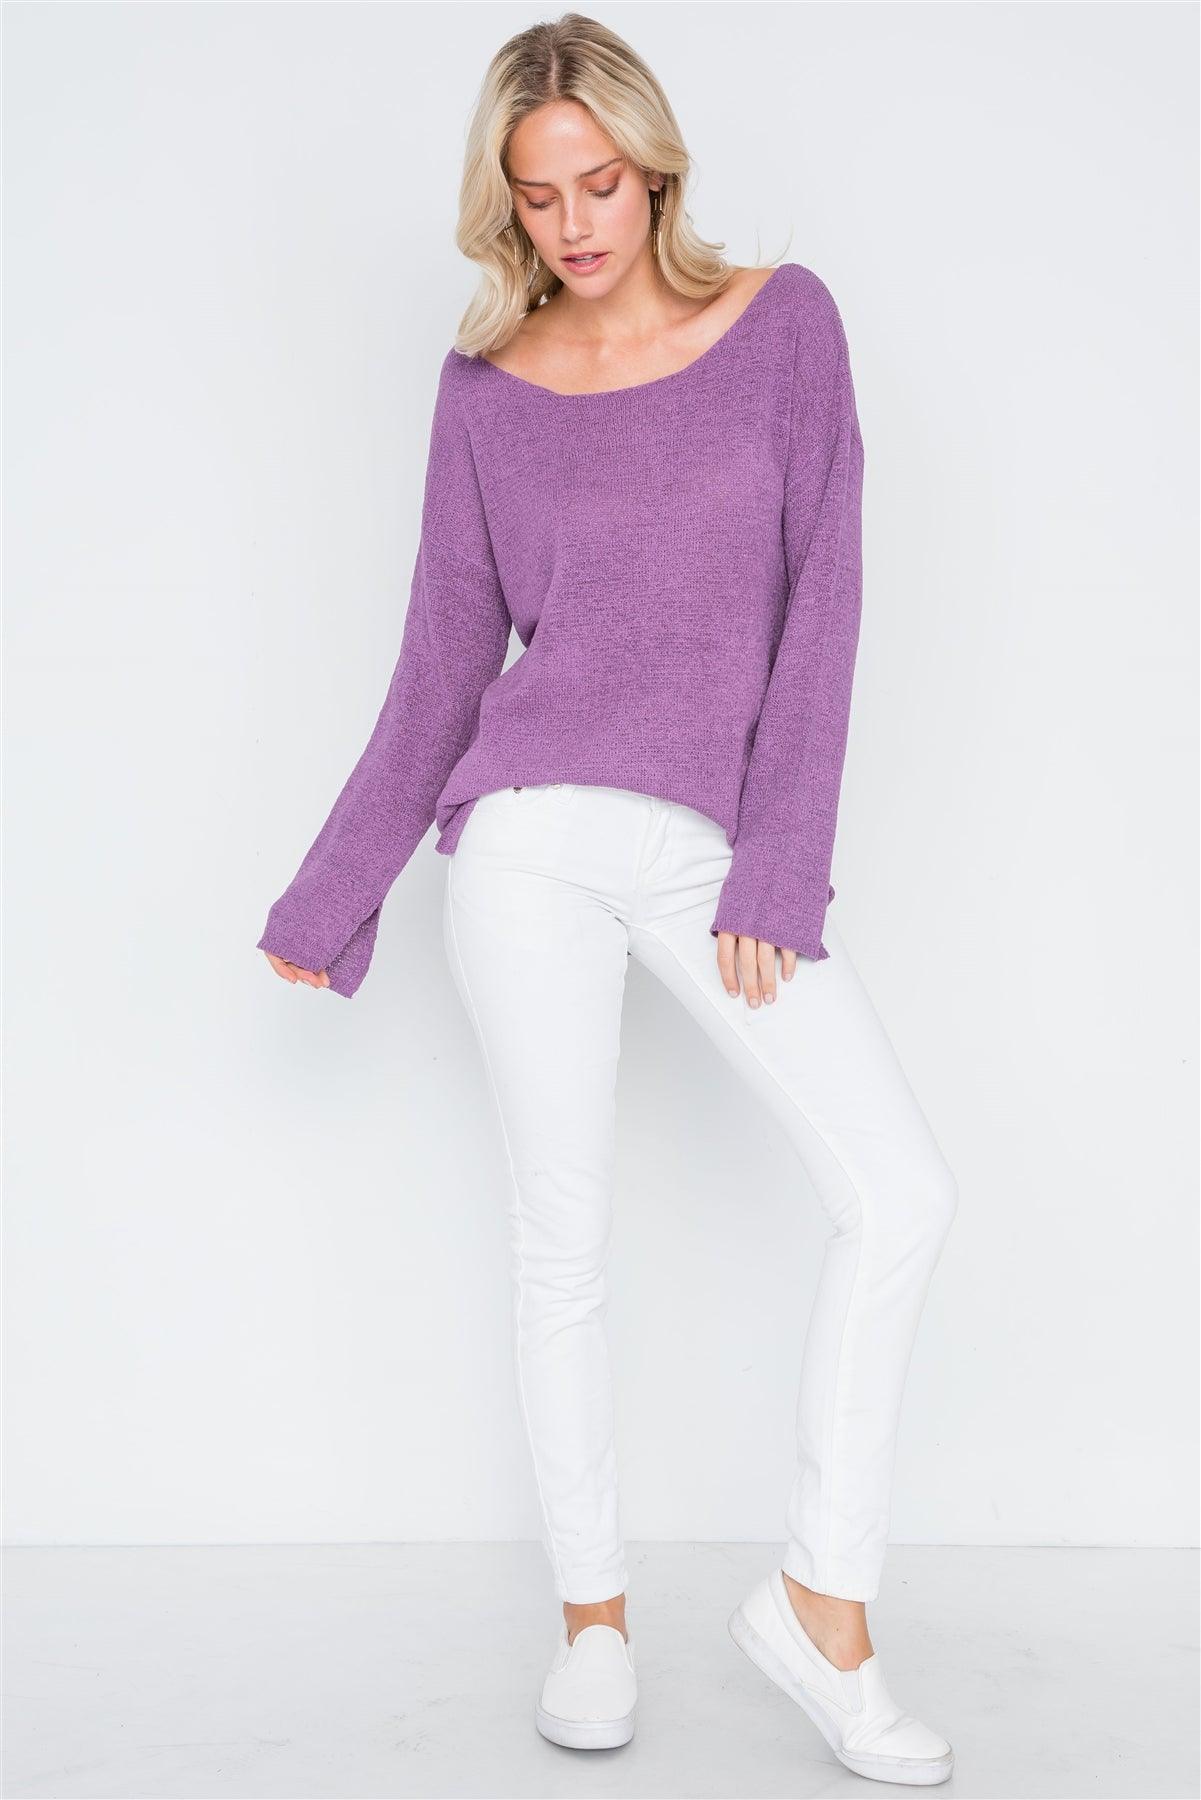 Haze Purple Scoop Neck Long Sleeves Sweater /2-2-2